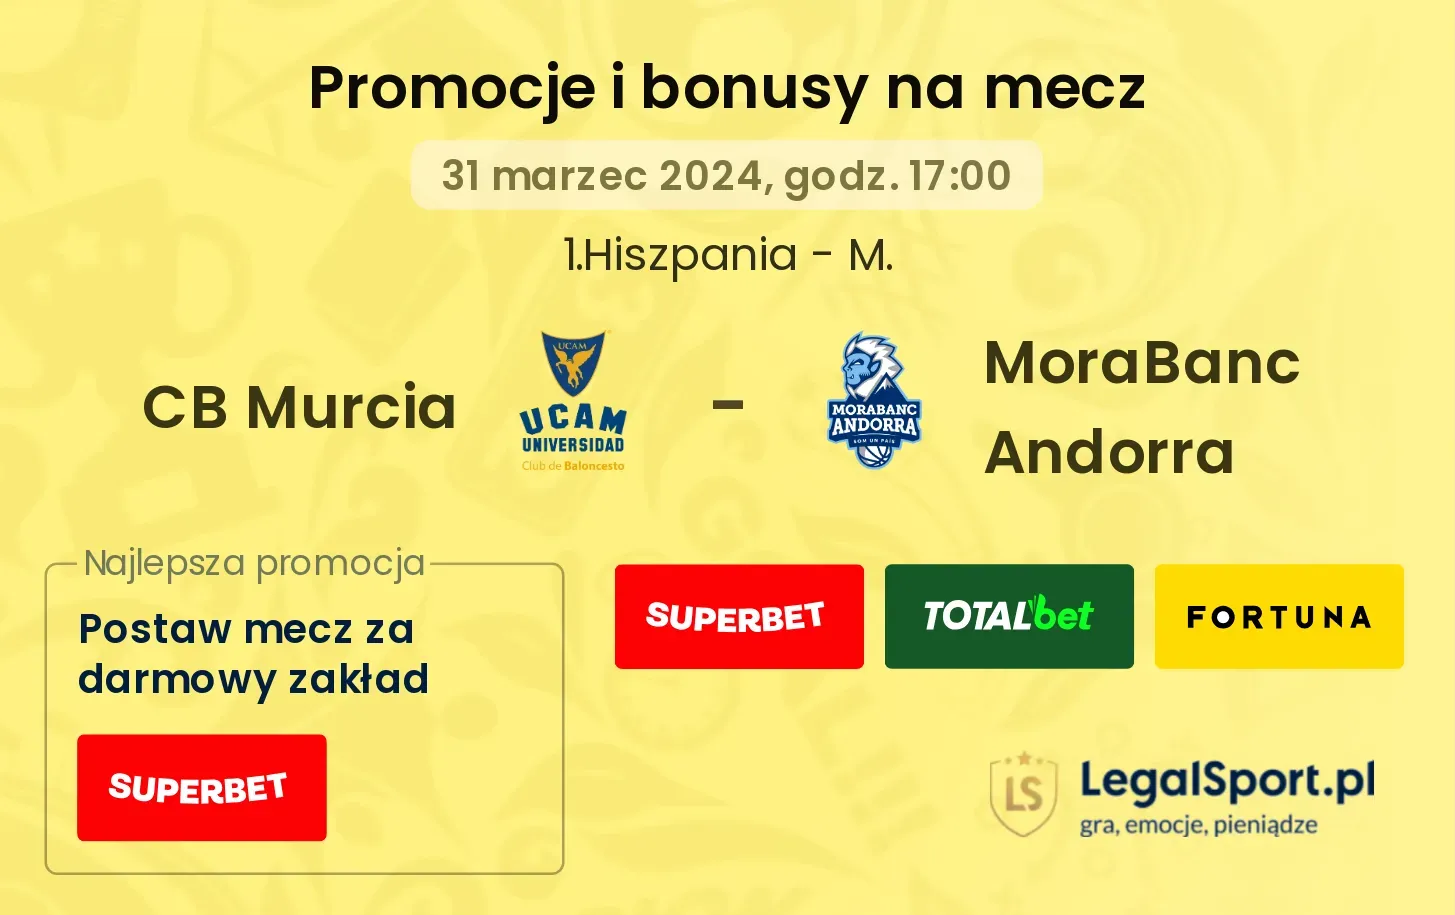 CB Murcia - MoraBanc Andorra promocje bonusy na mecz